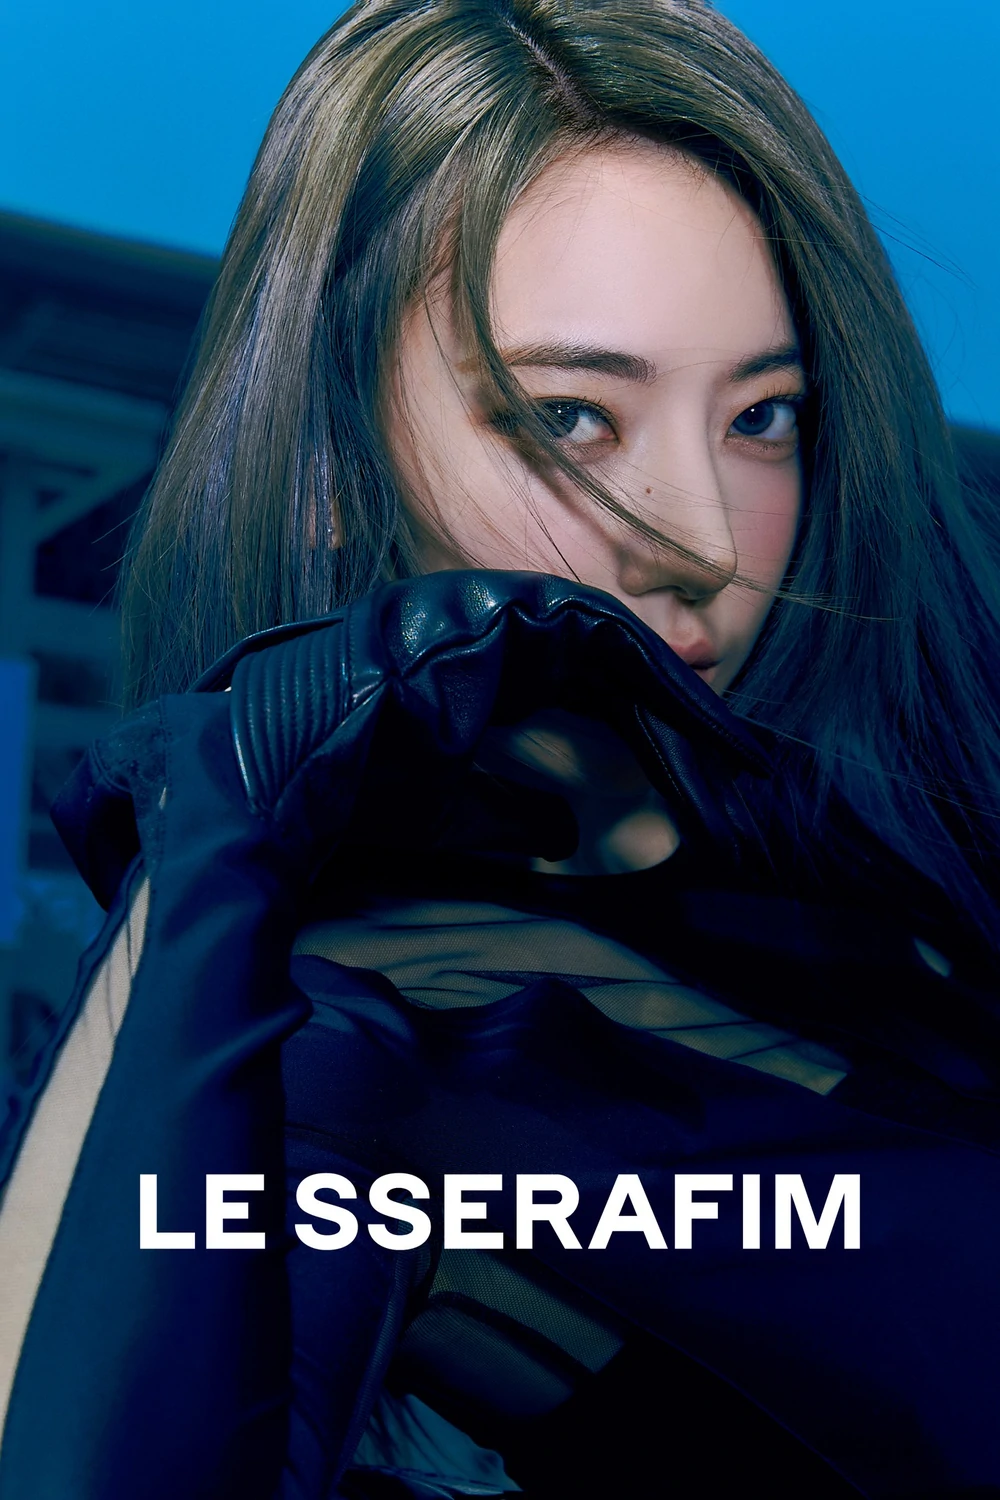 Le Sserafim I'm Fearless Sakura Concept Teaser Picture Image Photo Kpop K-Concept 2